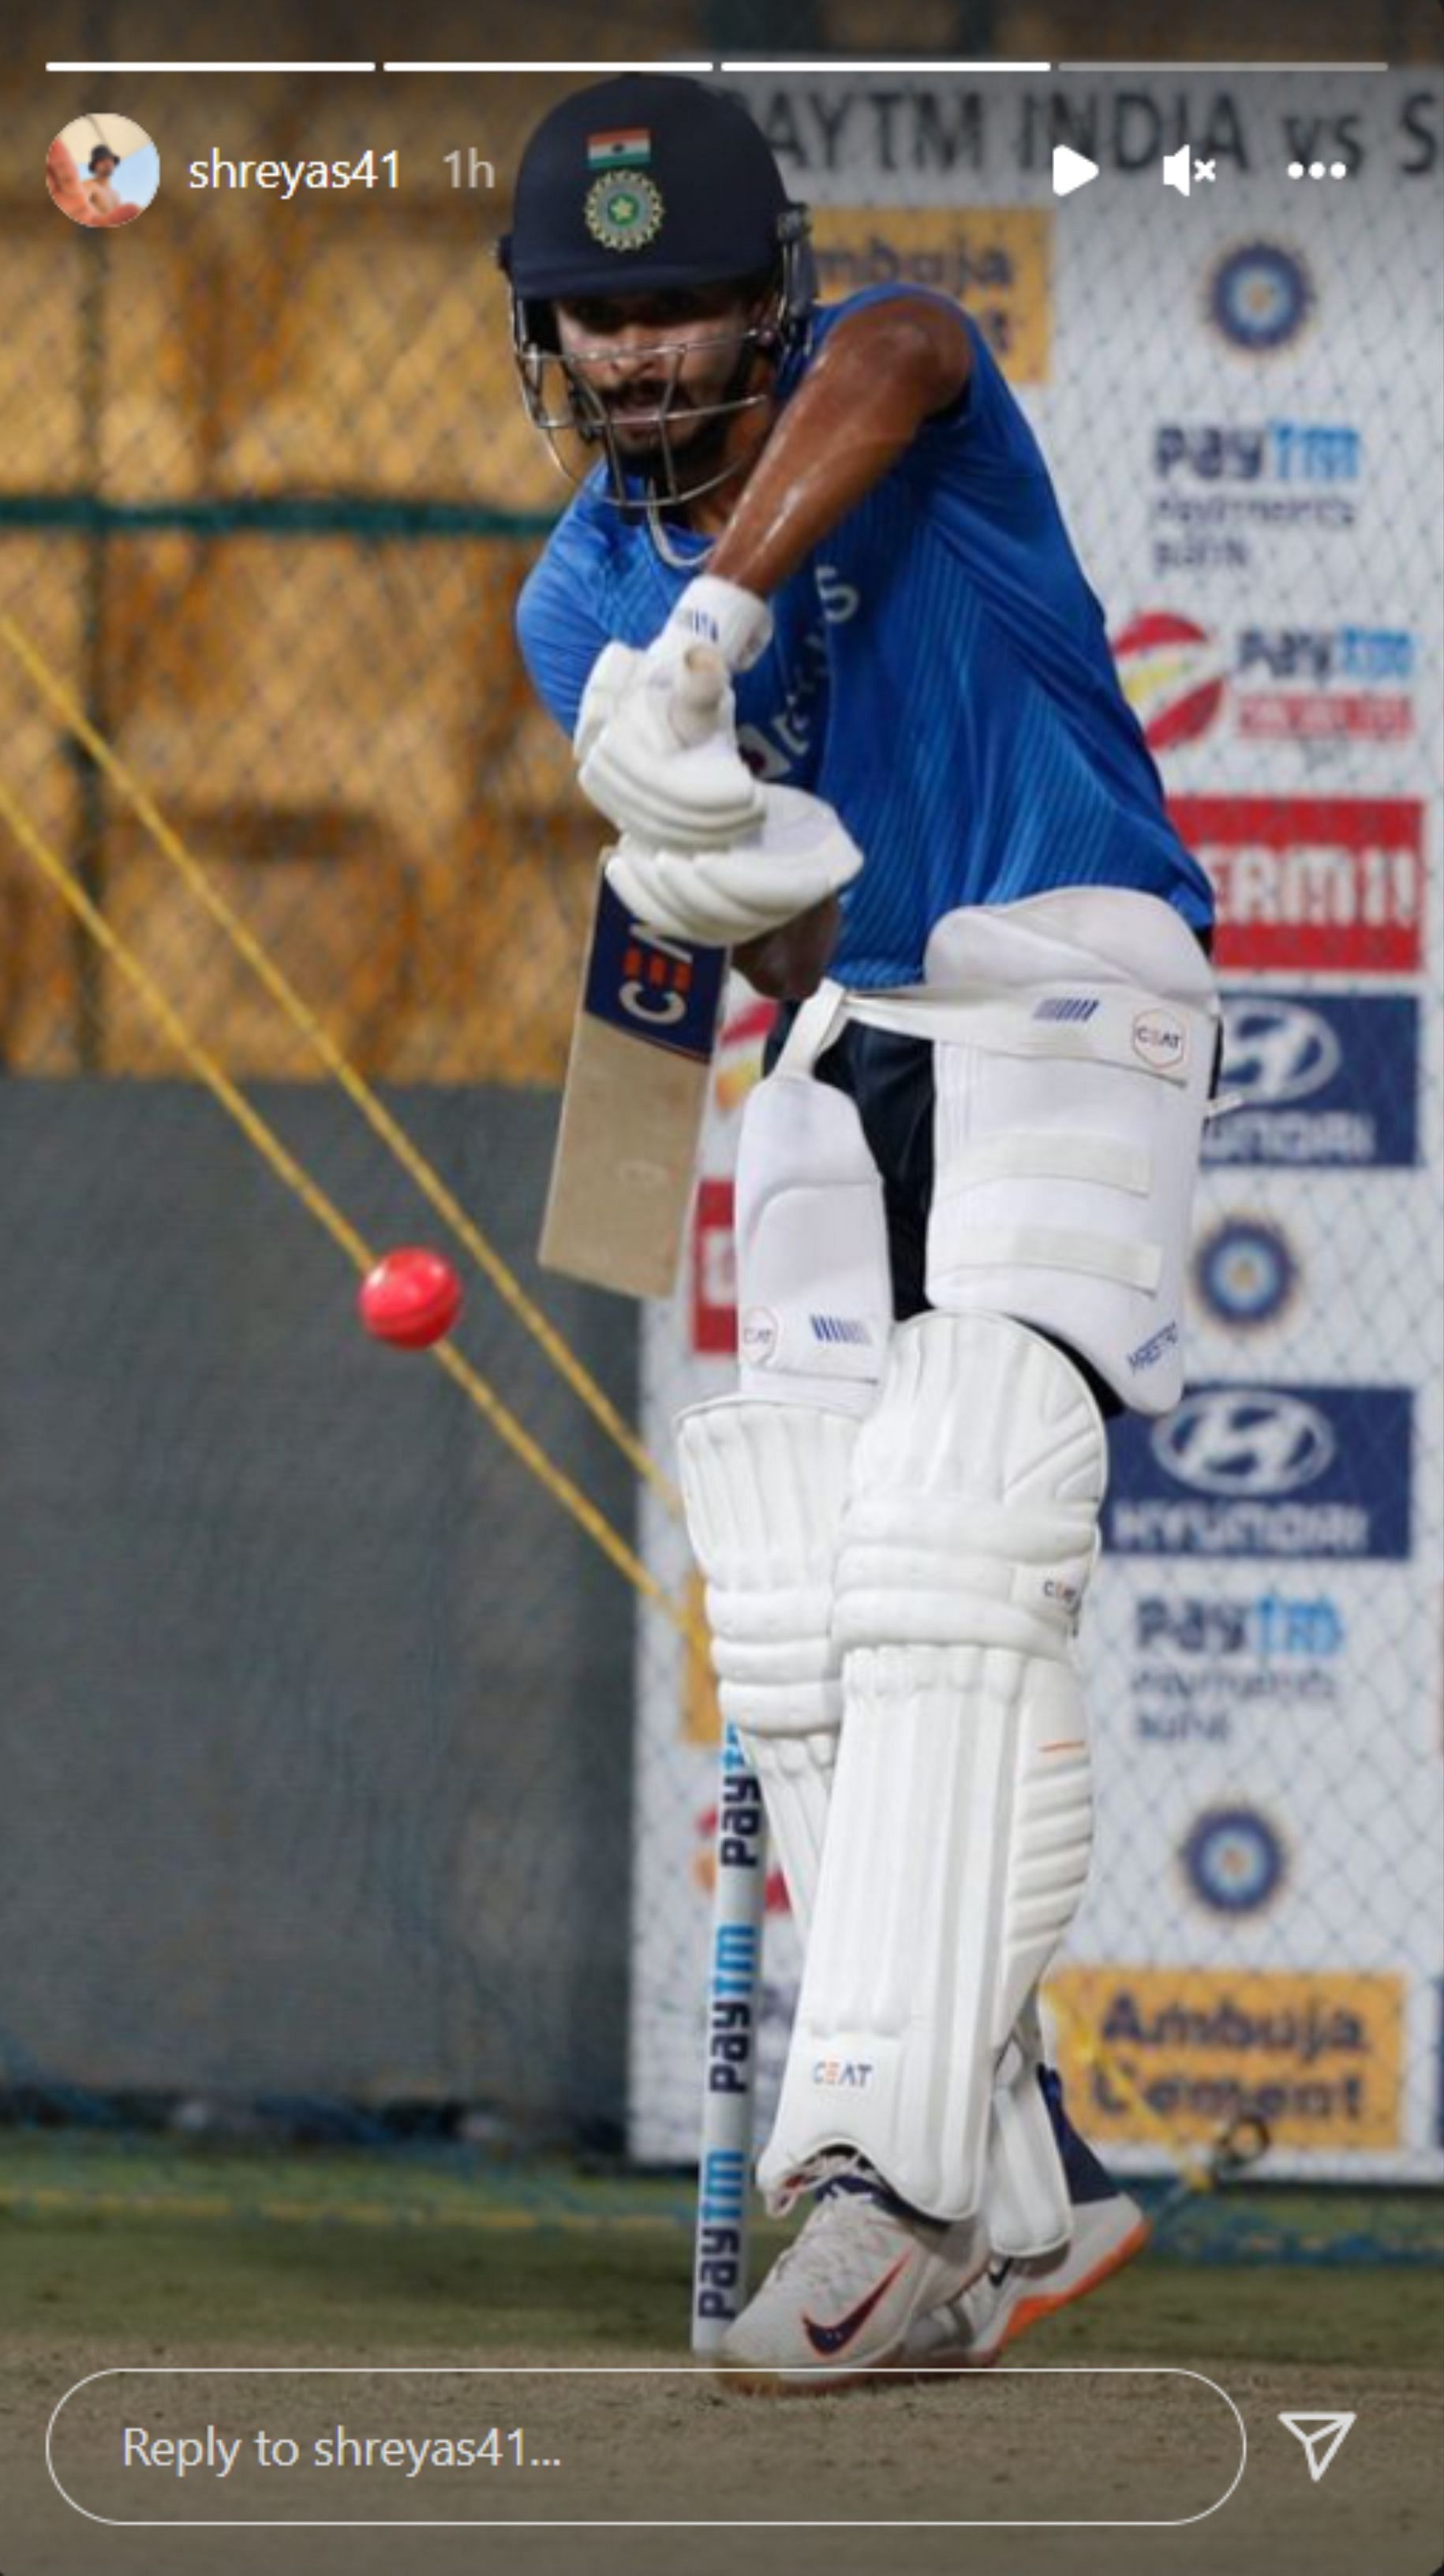 Shreyas batting in the nets.